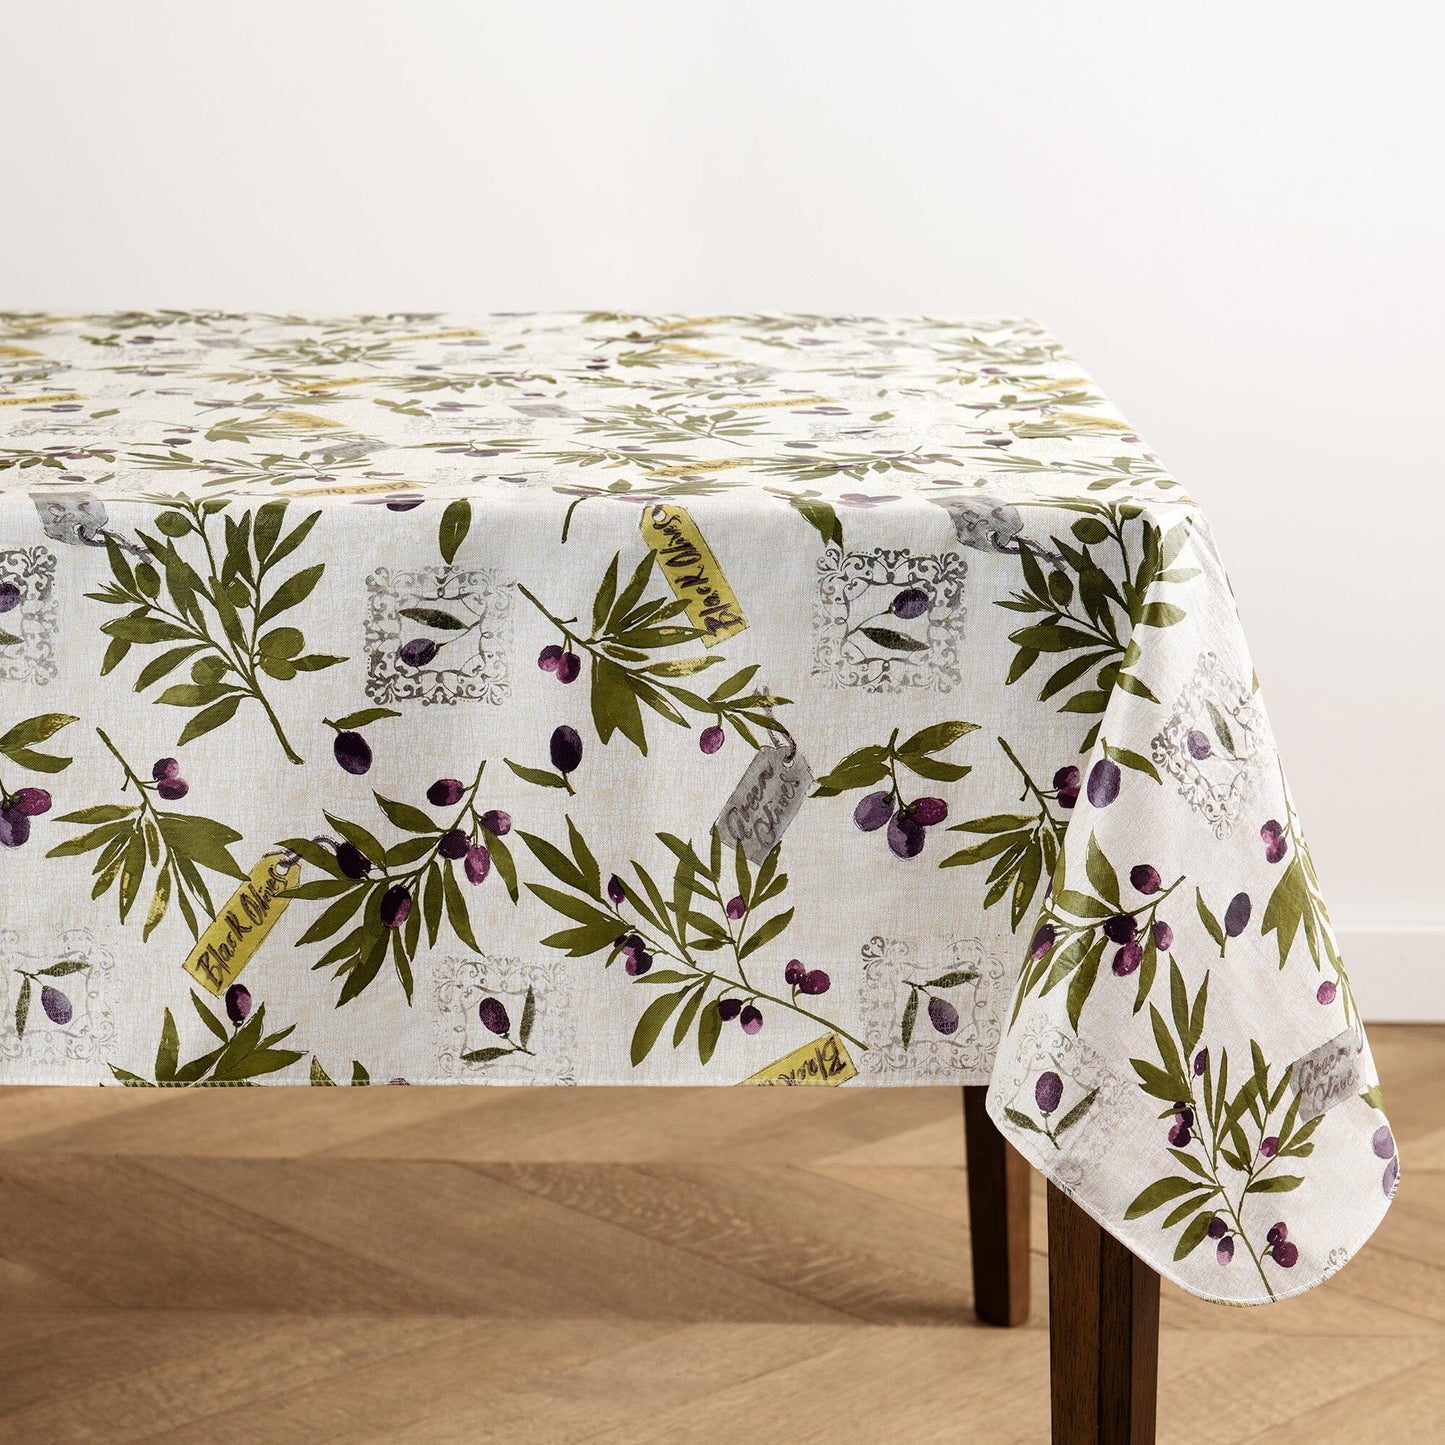 Montalcino Italian Olive Branches Printed Vinyl Indoor/Outdoor Tablecloth